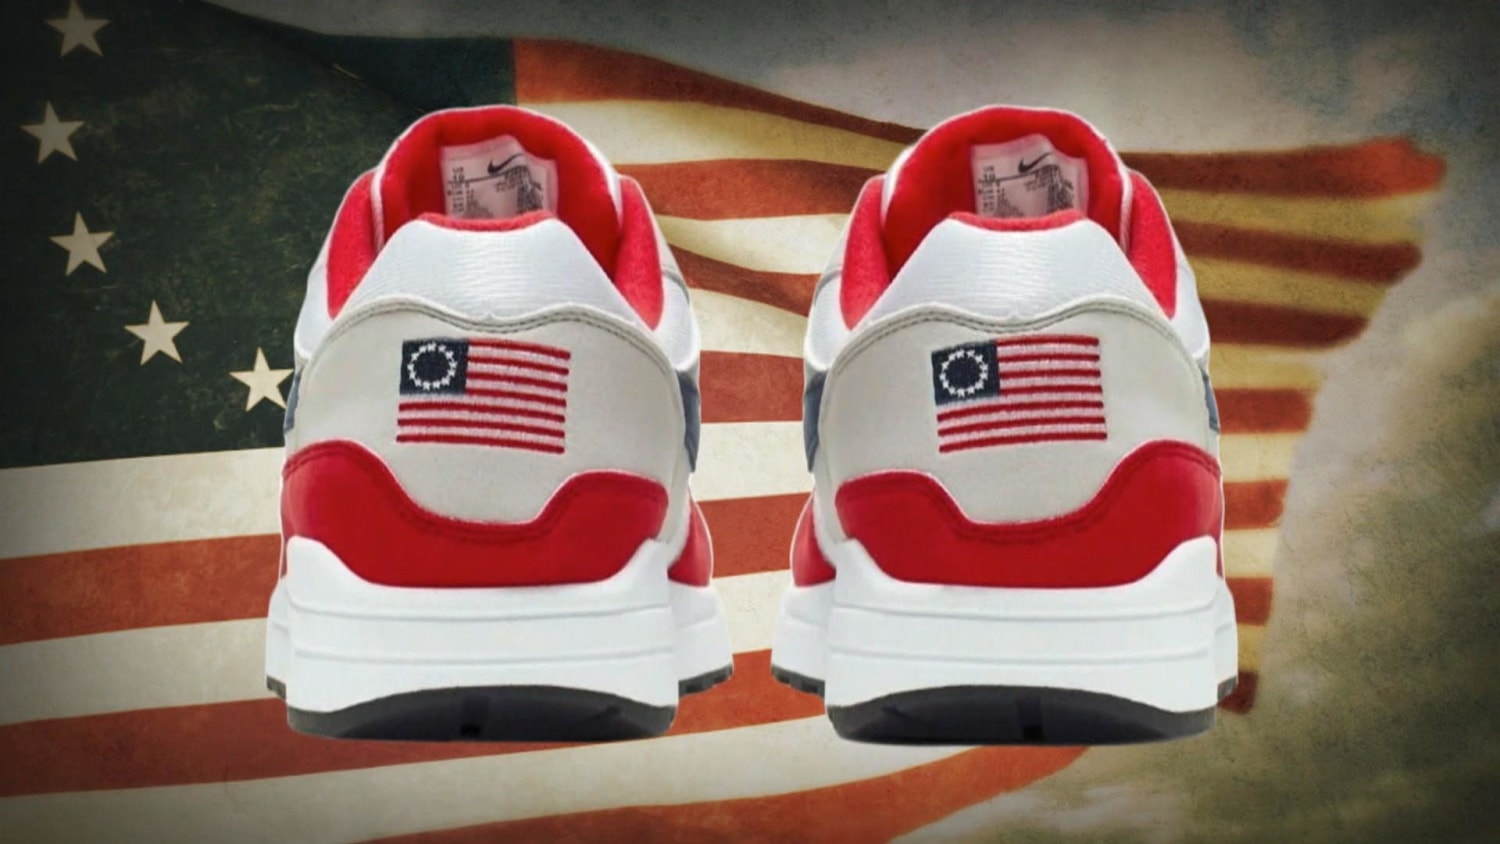 Nike Ross flag sneakers backlash